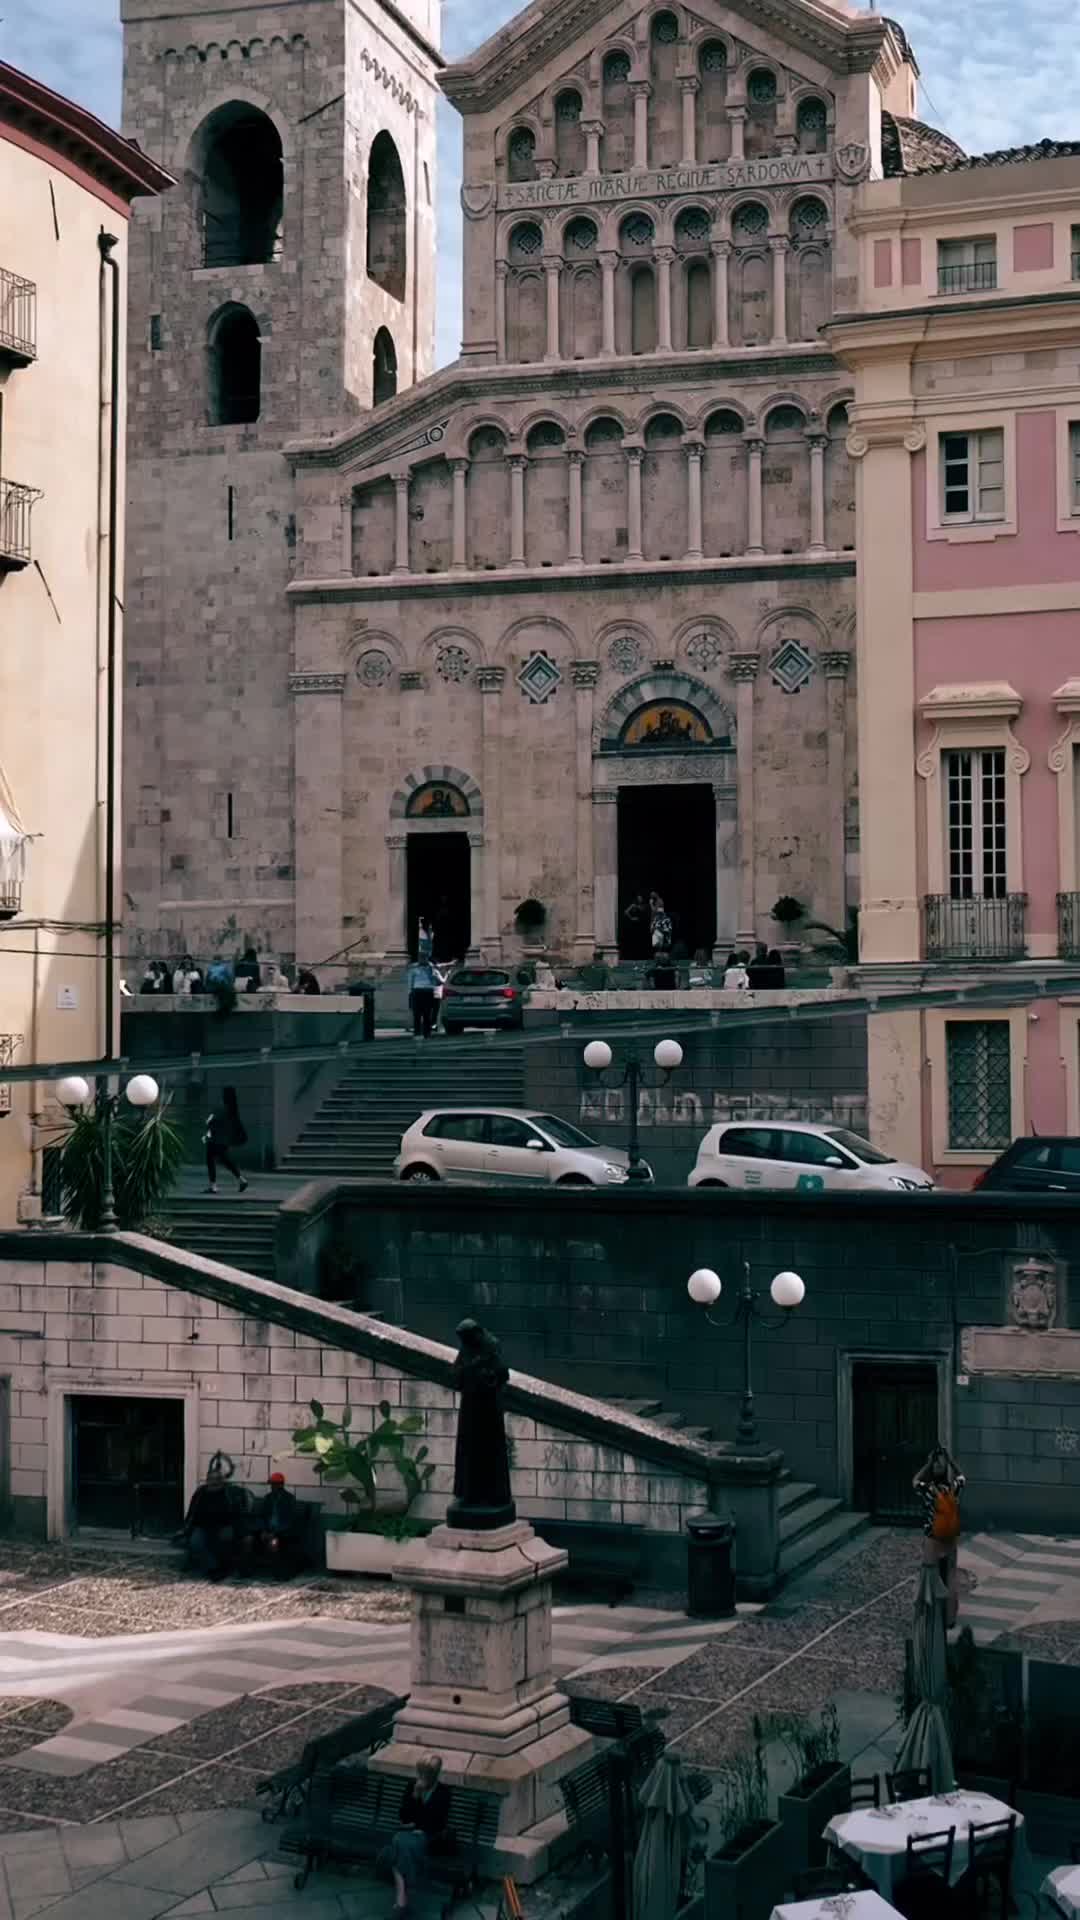 Cattedrale di Santa Maria Assunta: Cagliari's Iconic Landmark